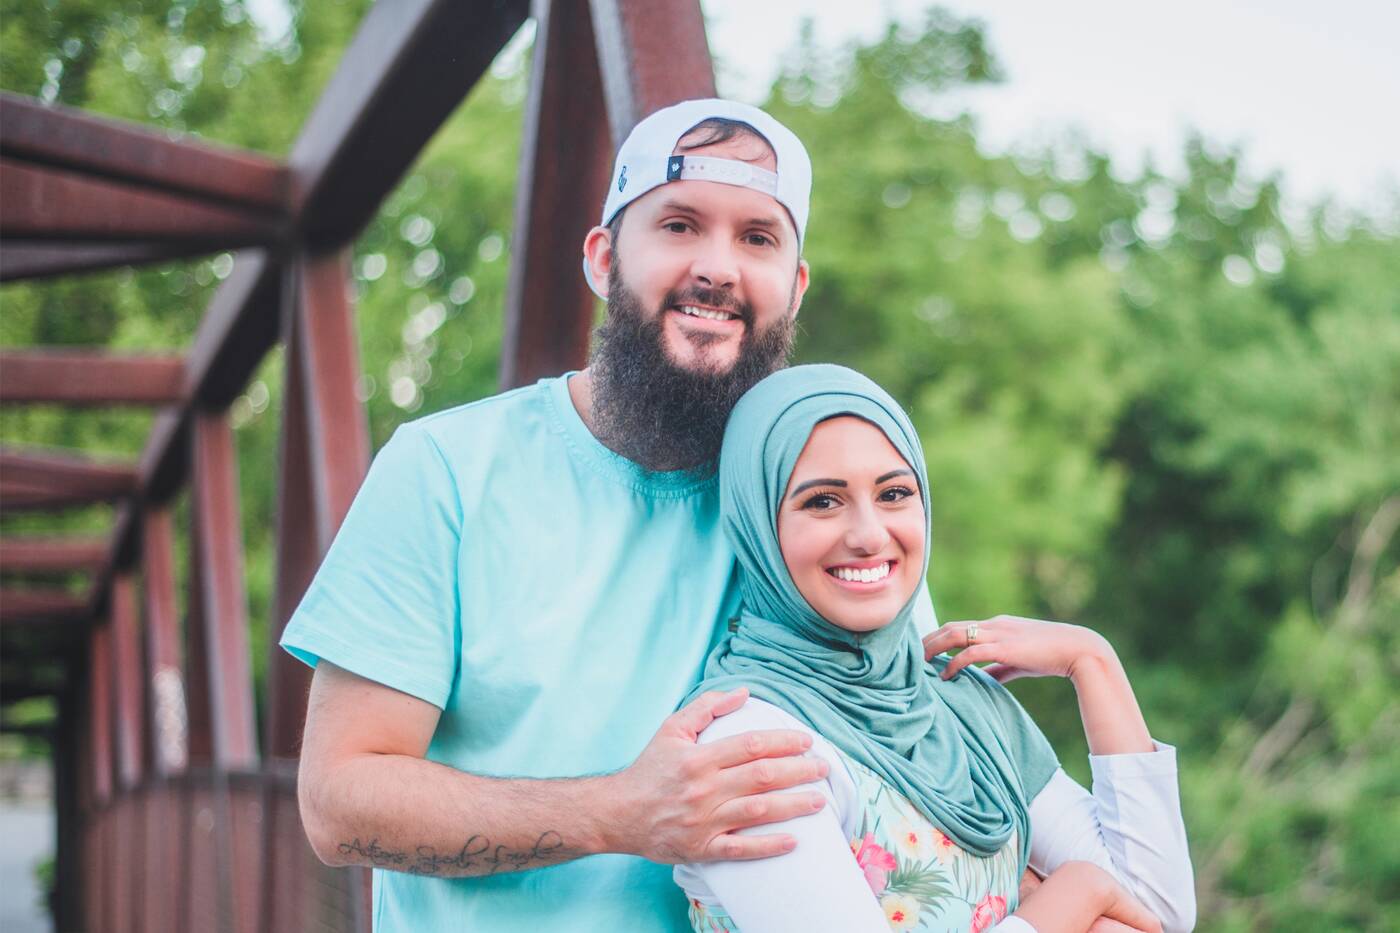 VIDEO: “Canadian Couple Combats Islamophobia on TikTok”